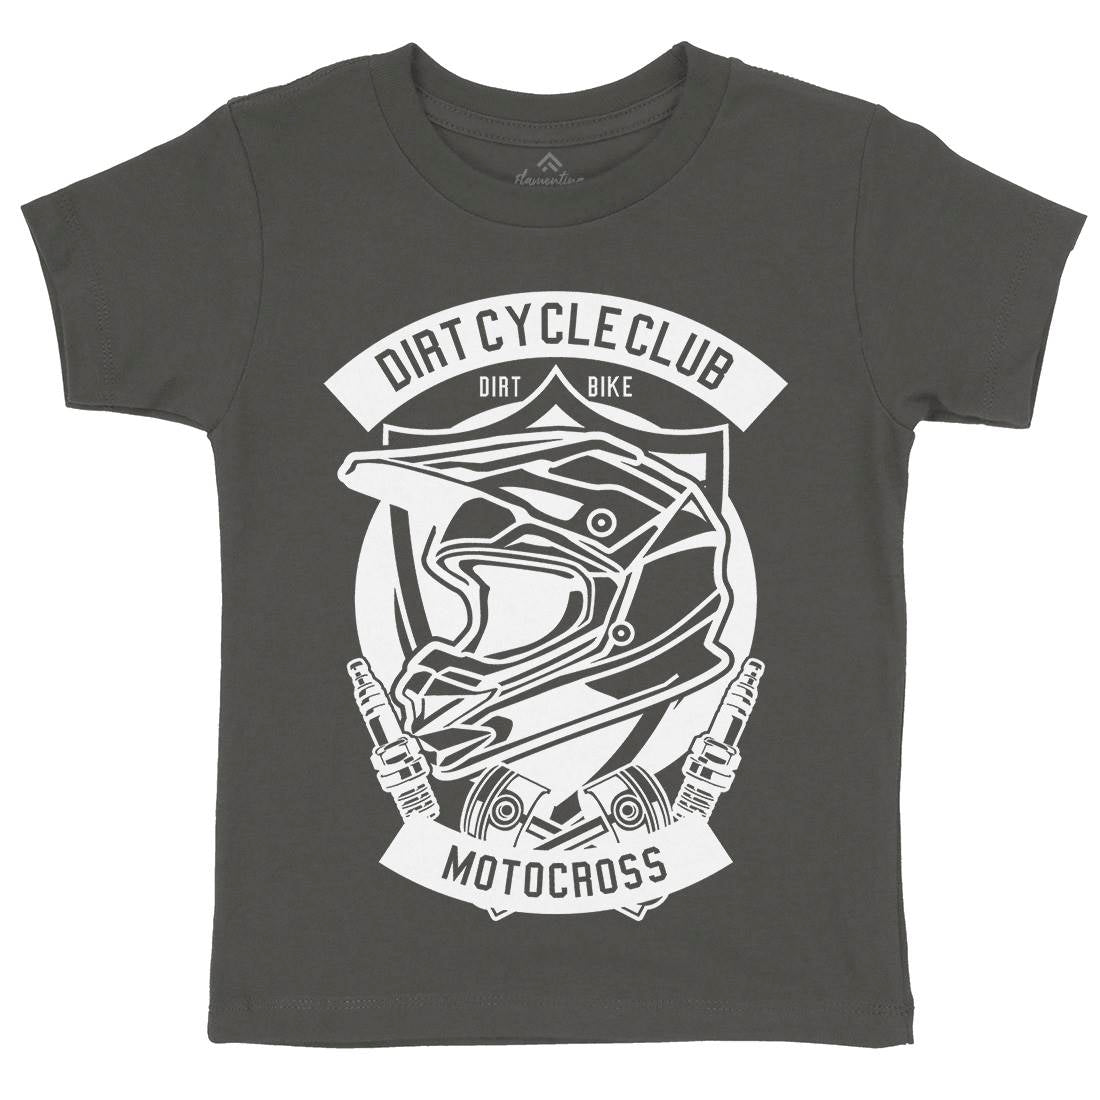 Dirty Cycle Club Kids Crew Neck T-Shirt Motorcycles B532